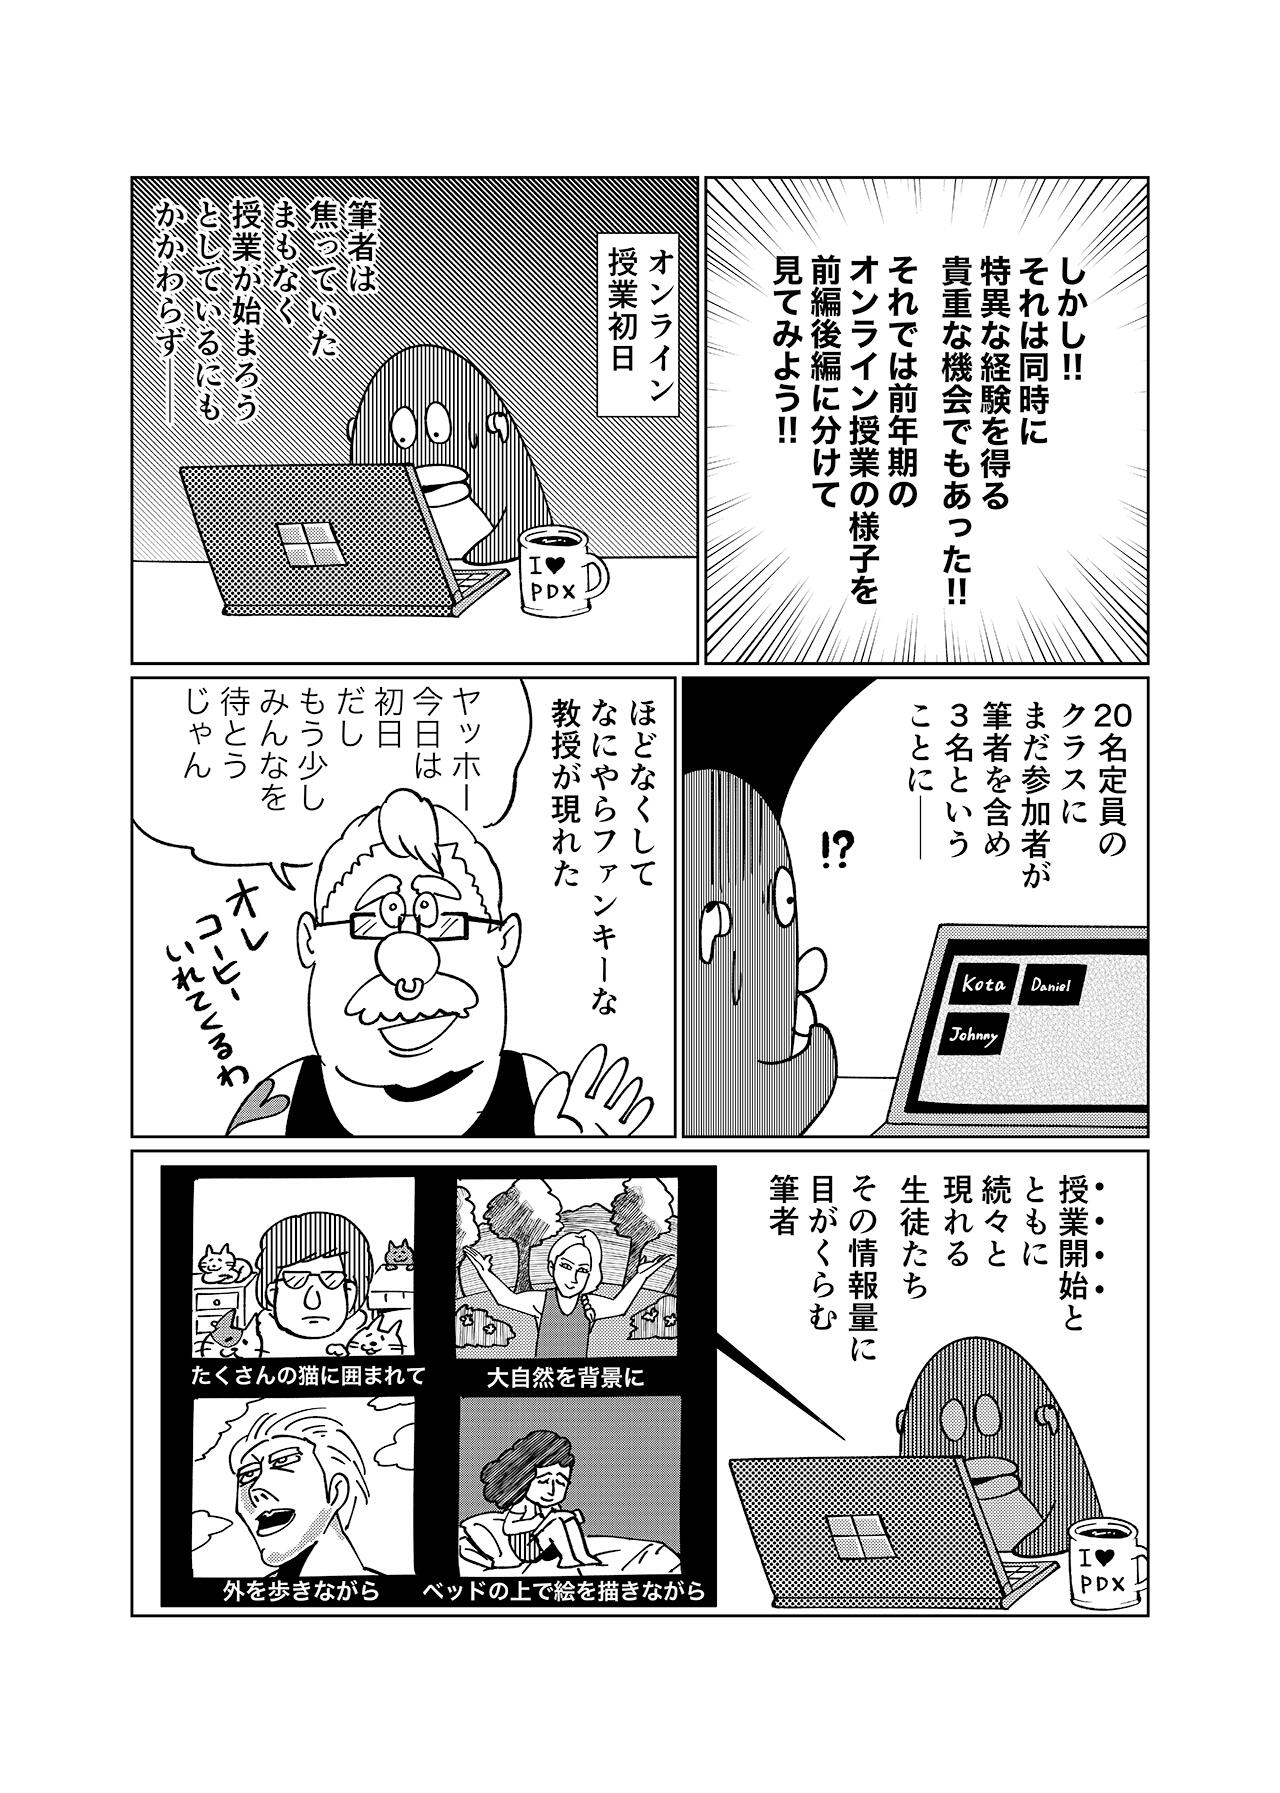 https://www.ryugaku.co.jp/column/images/3_2_1280.jpg